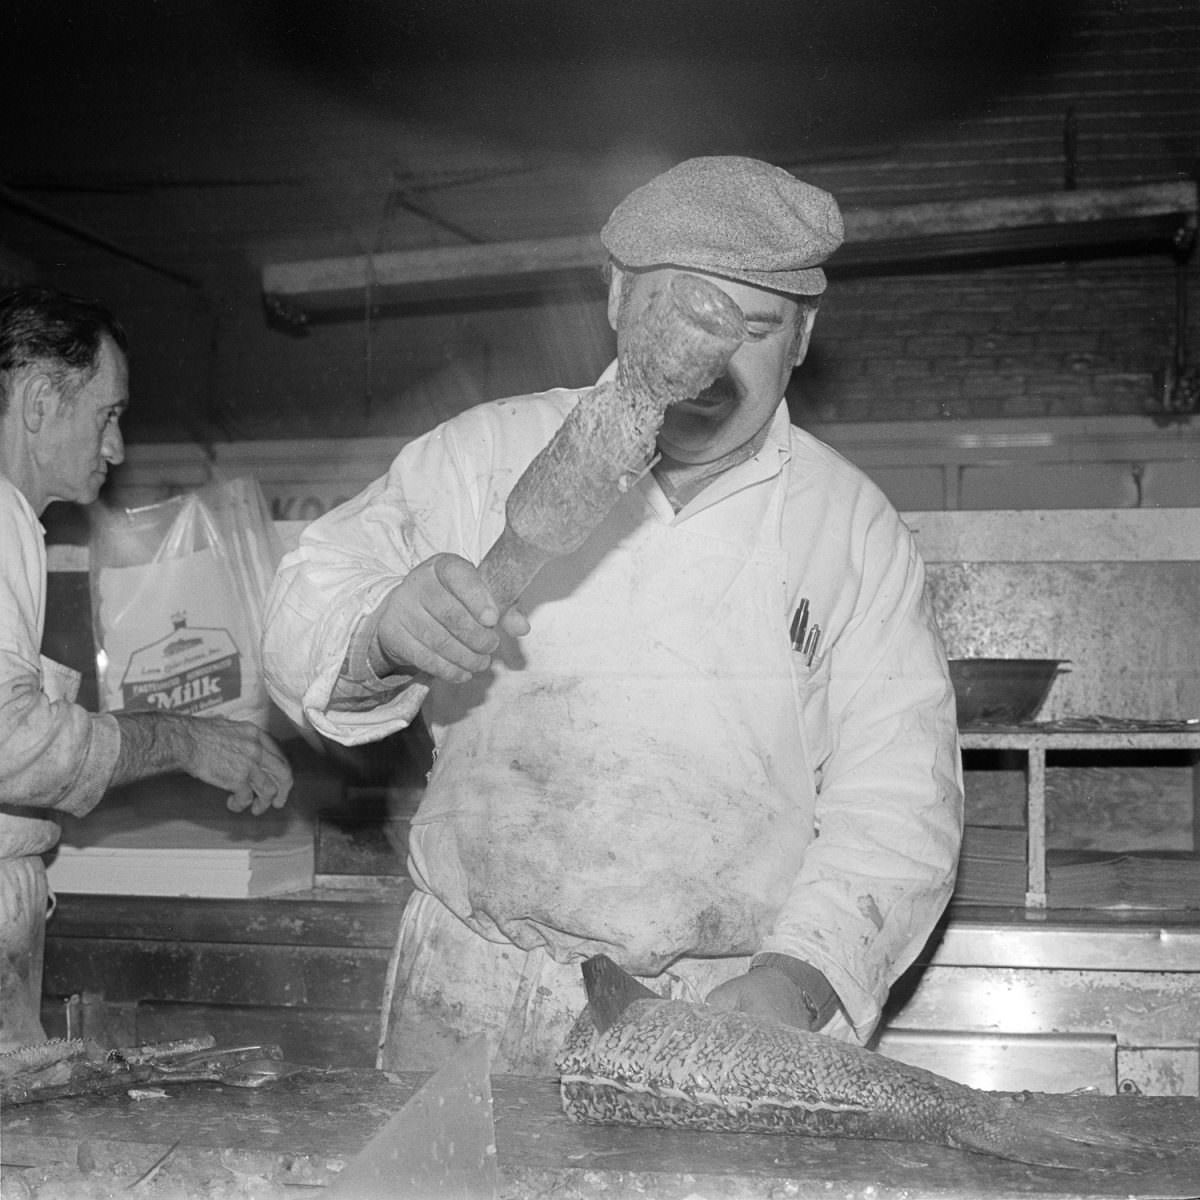 Slicing Fish At Essex Street Market, 1978